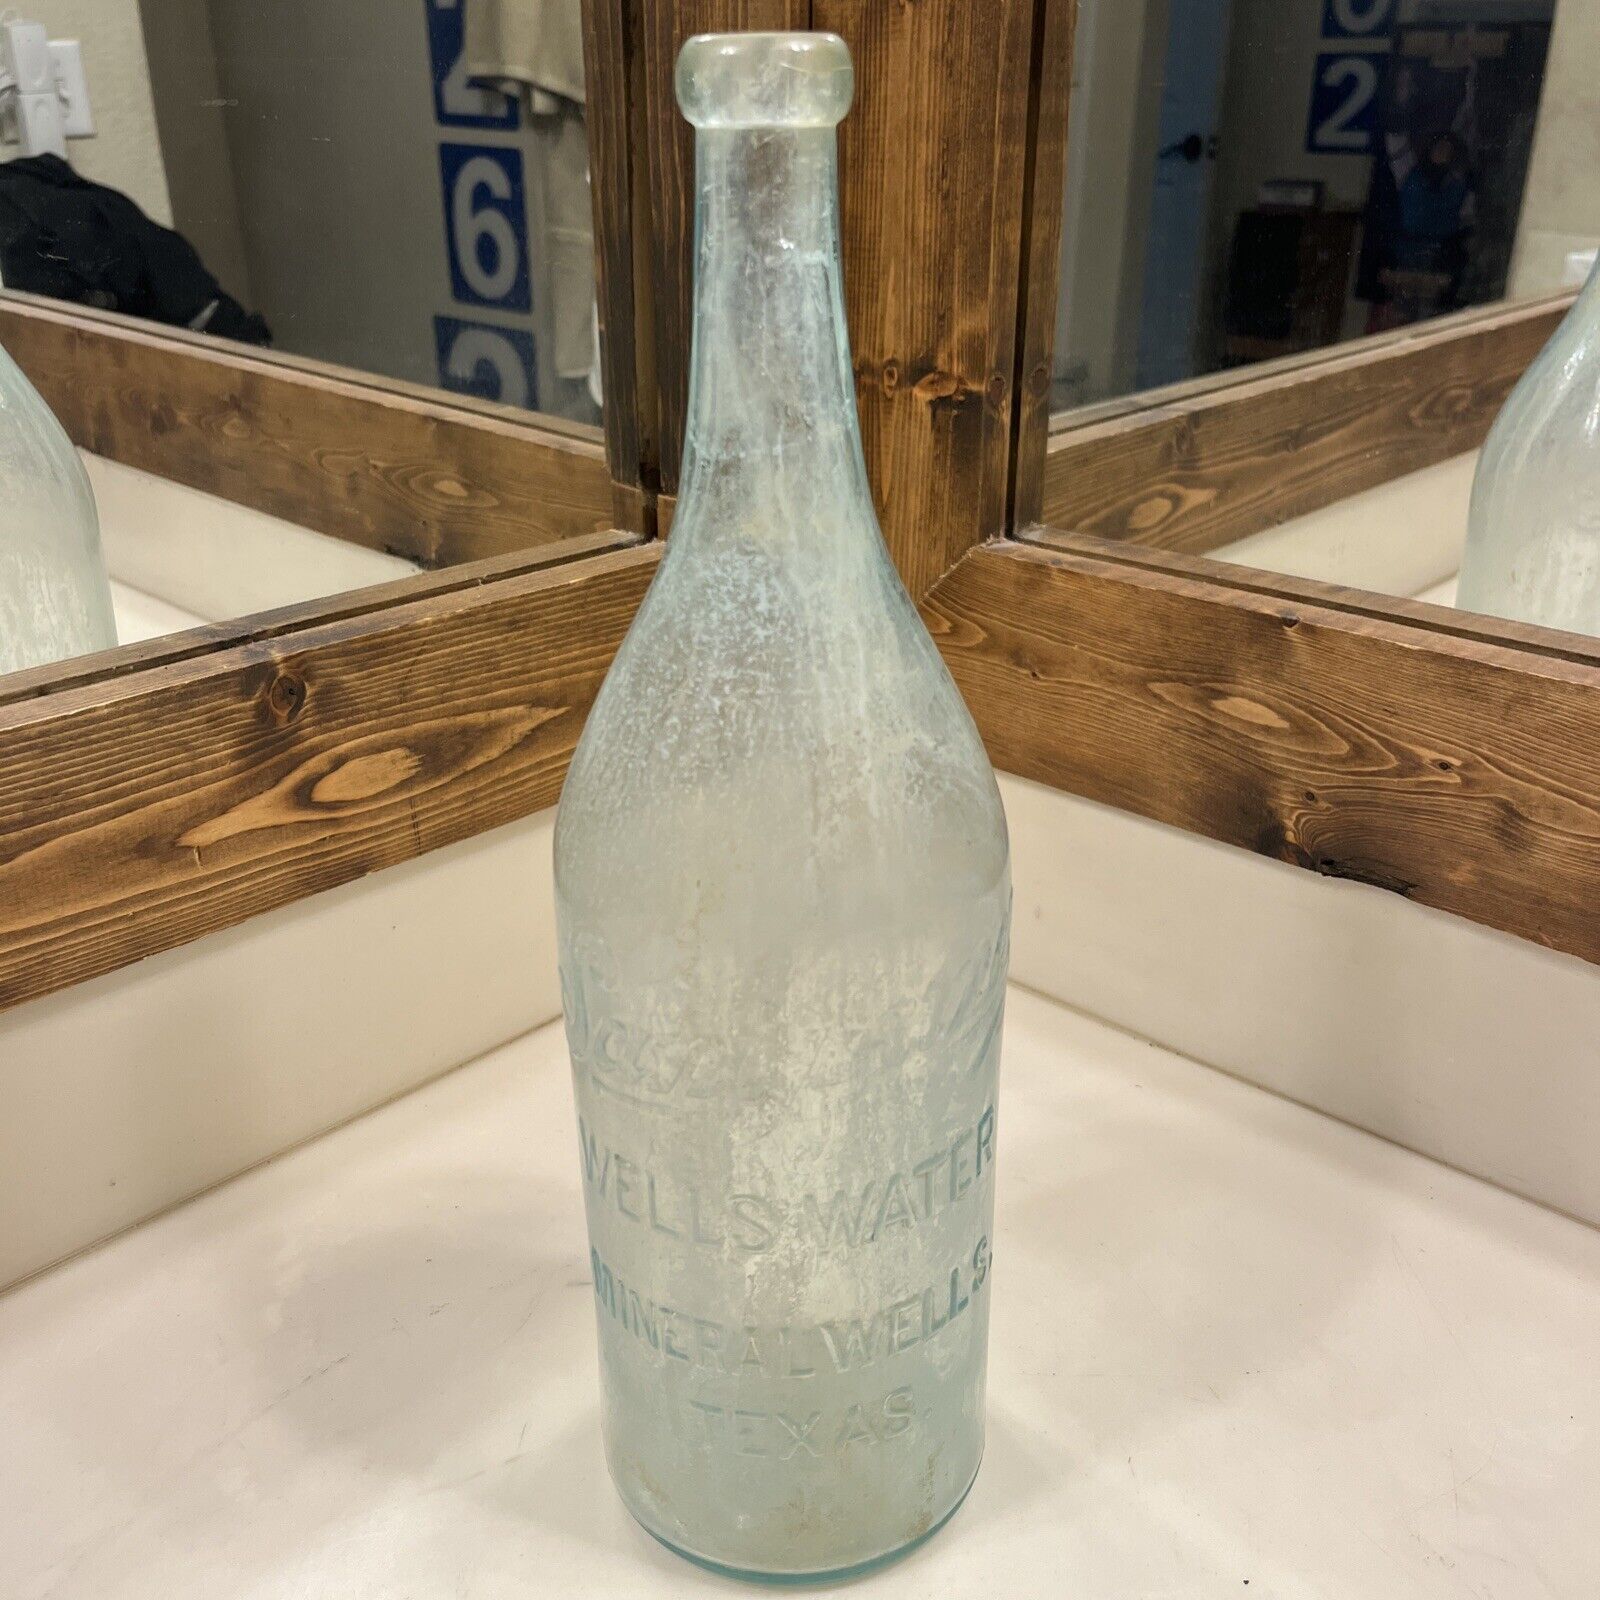 Mineral Wells Tx Sangcura Sprudel Glass Bottle Texas